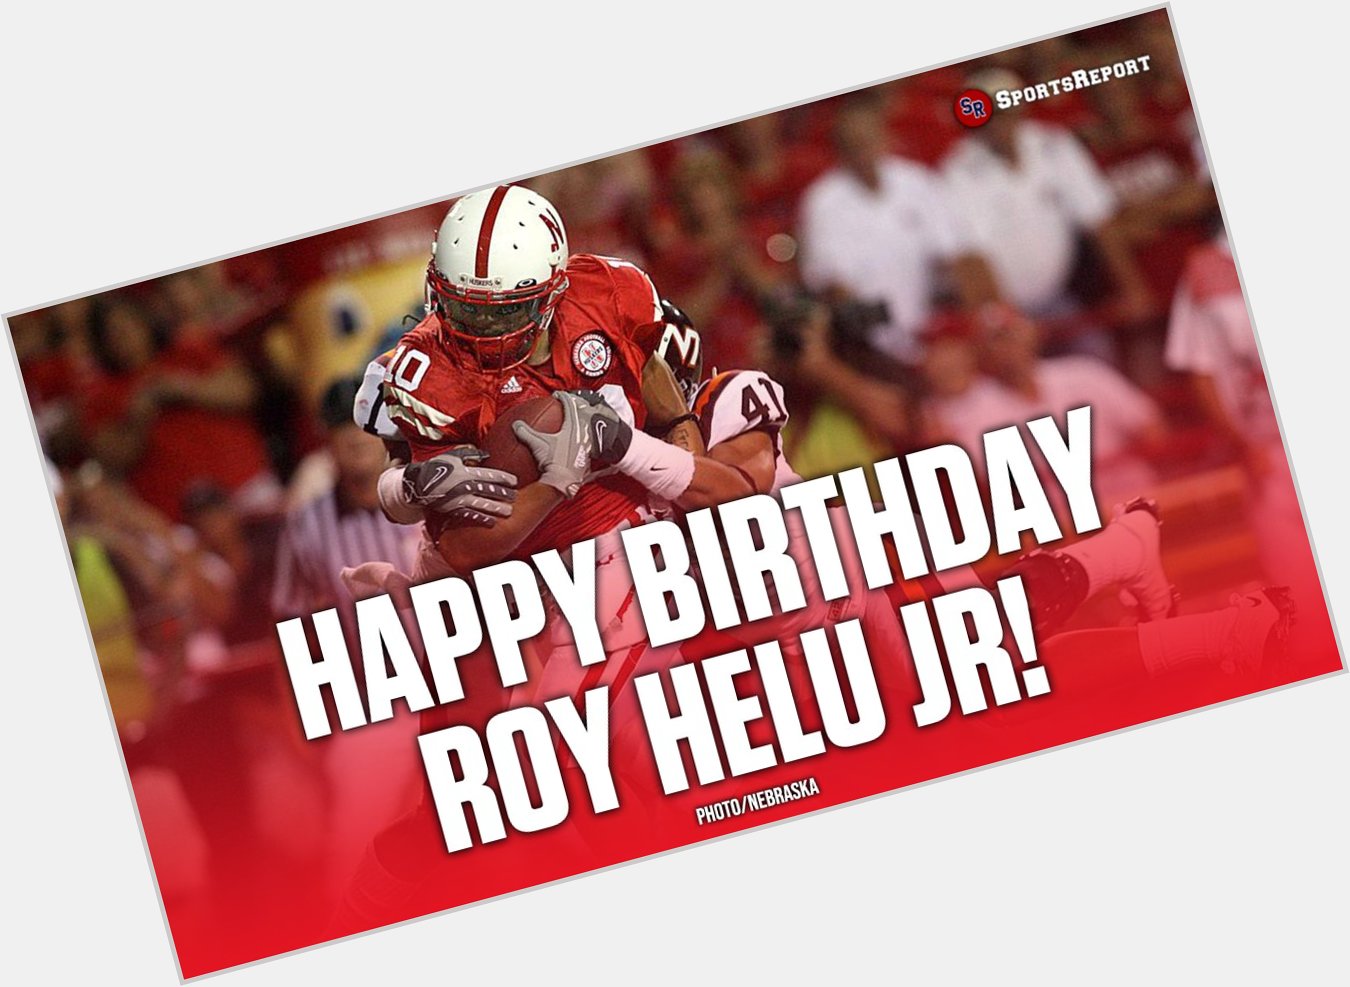  Fans, let\s wish Roy Helu Jr. a Happy Birthday! GO 